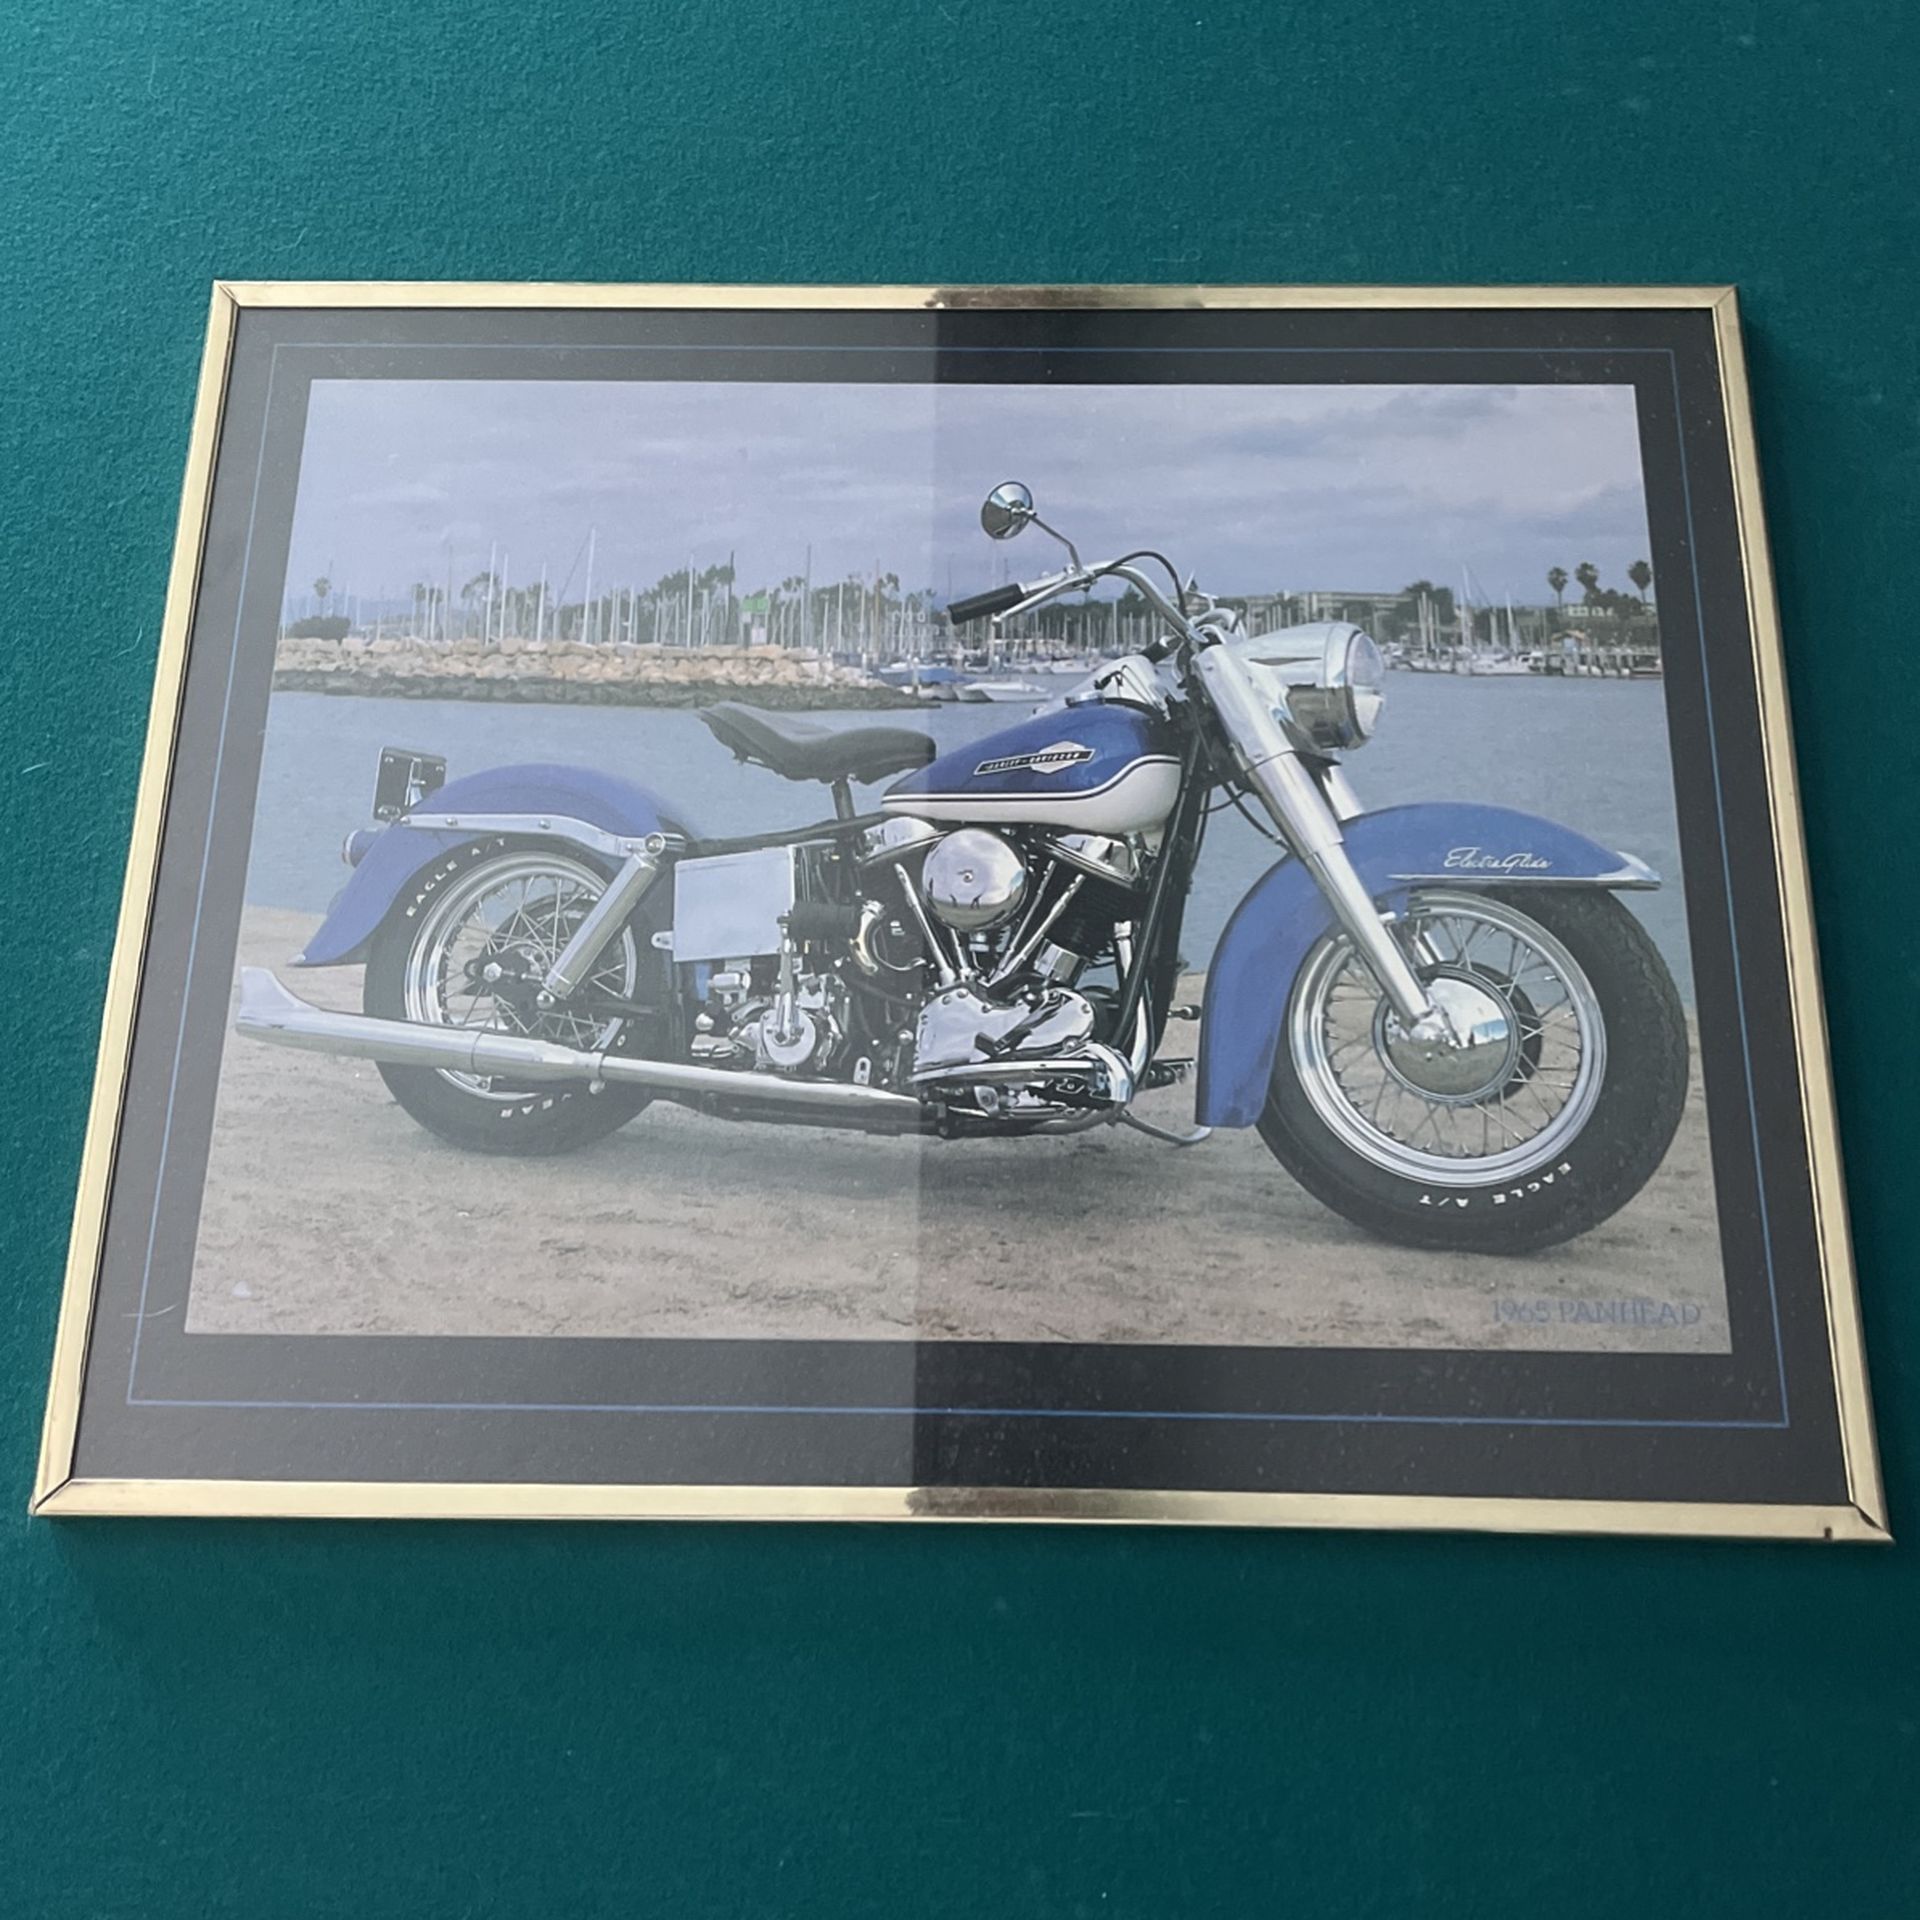 Motorcycle Frames For Garage or Other!